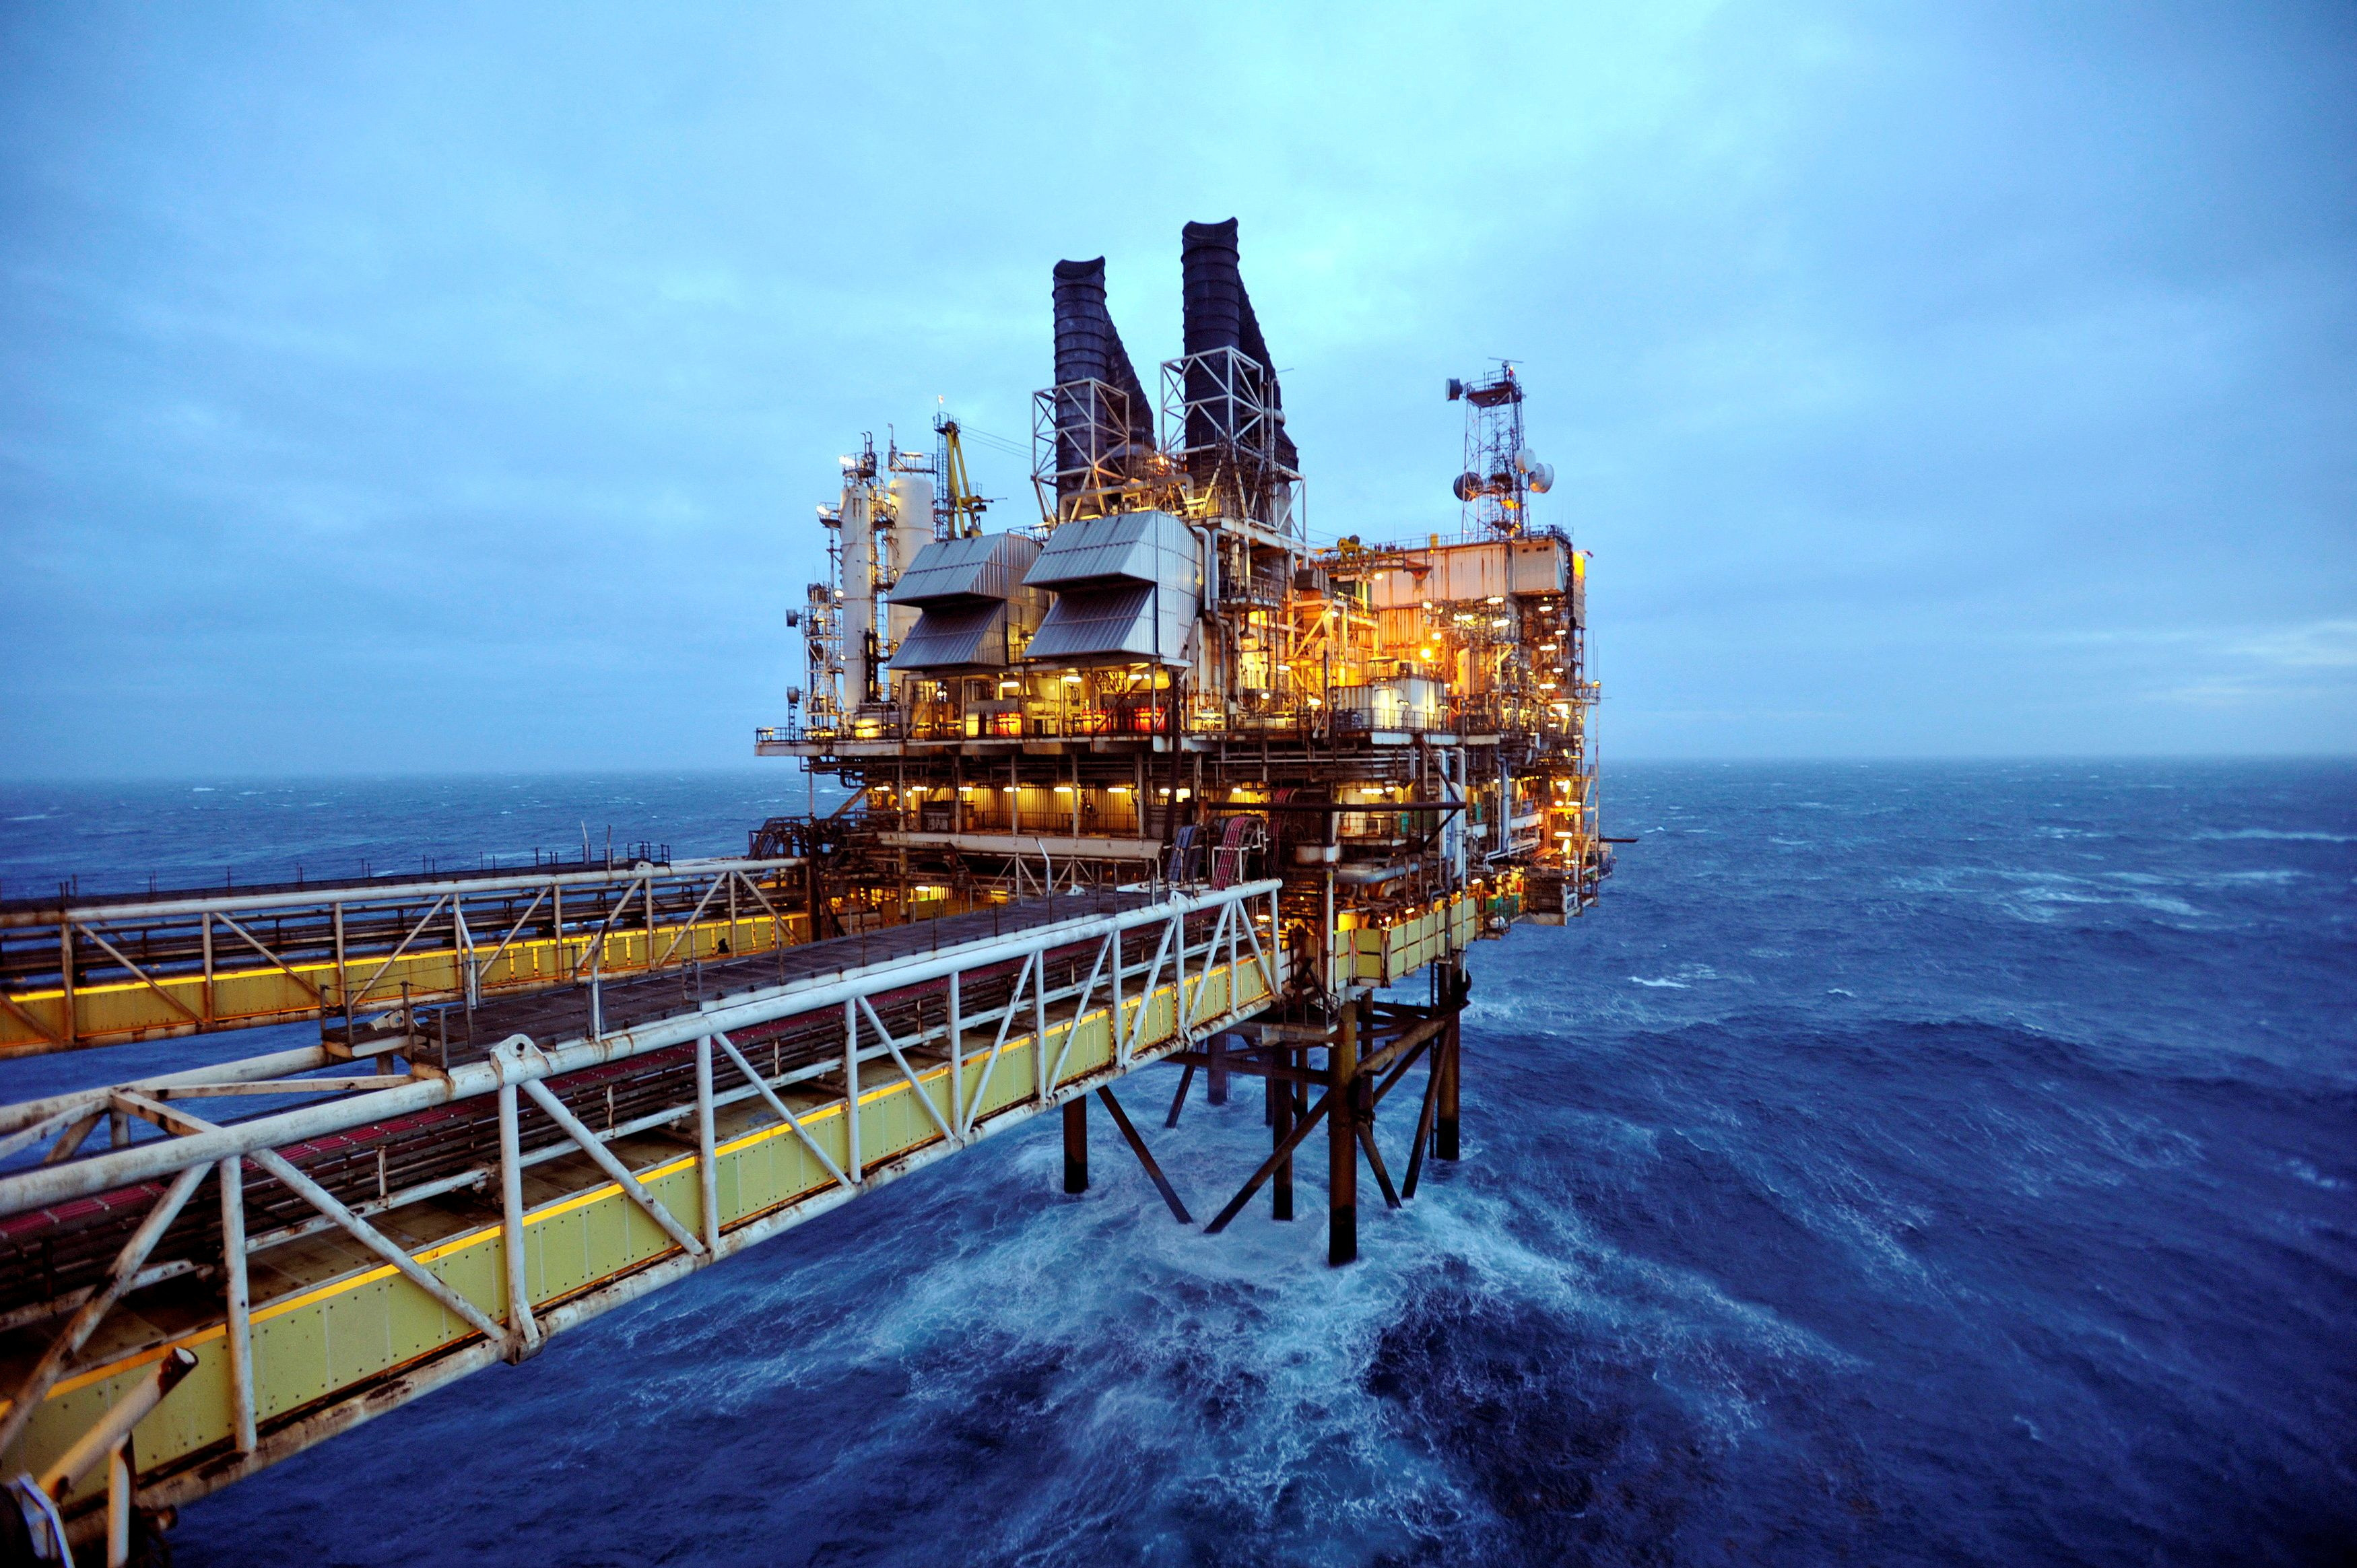 A BP oil platform in the North Sea off Scotland